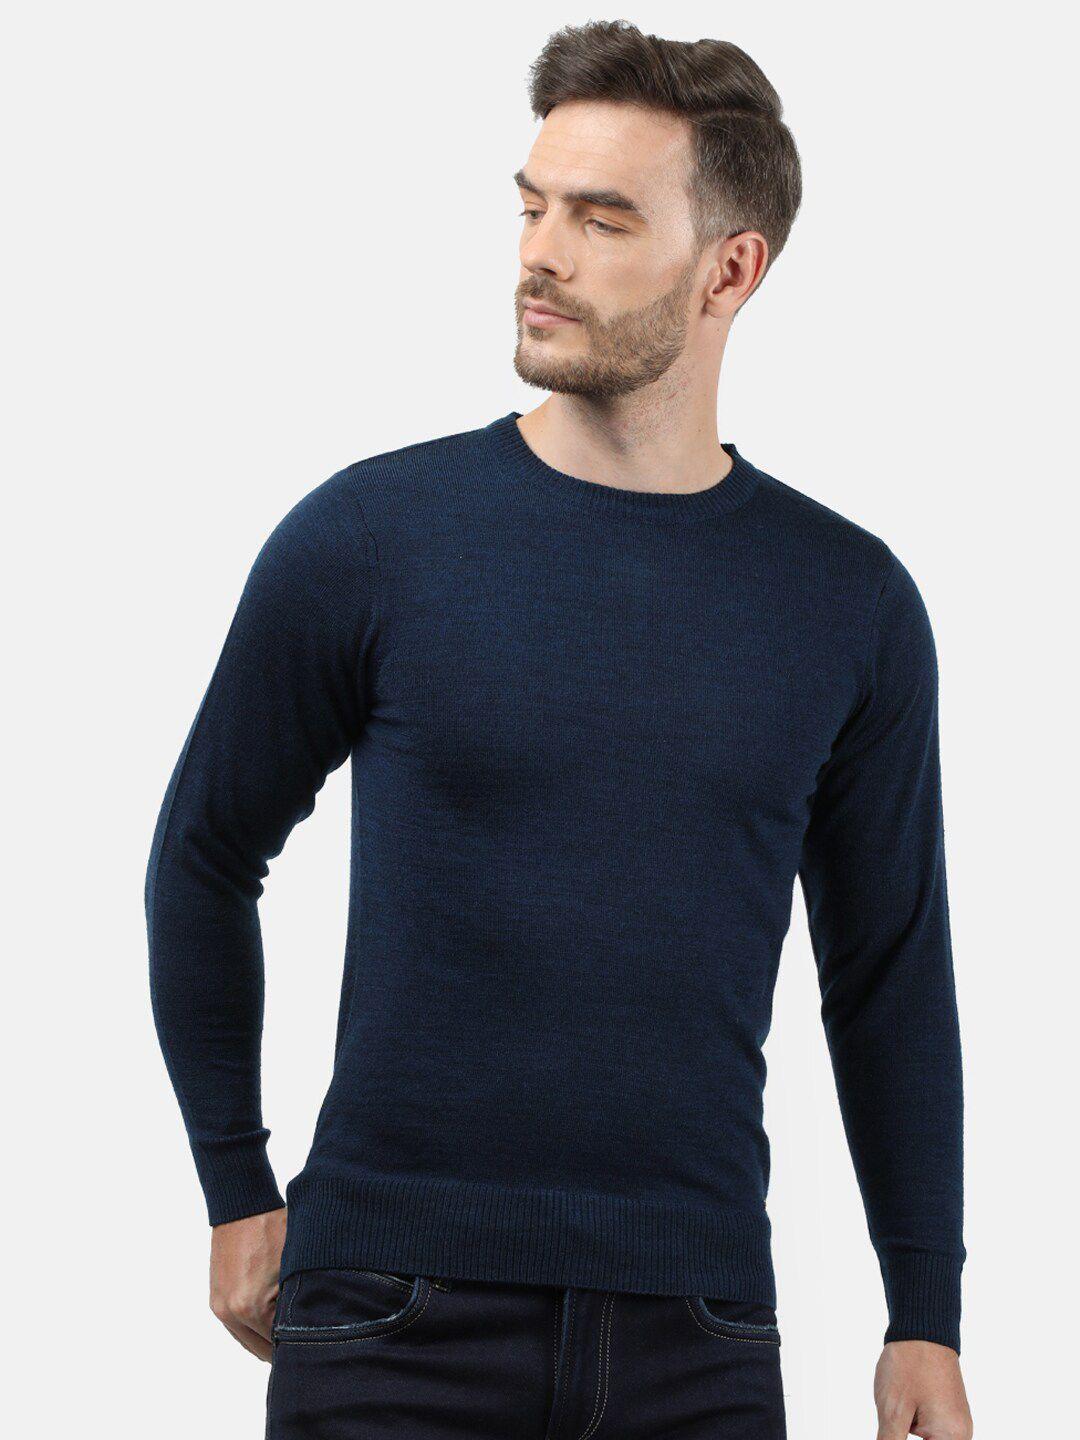 monte carlo men navy blue wool pullover sweaters